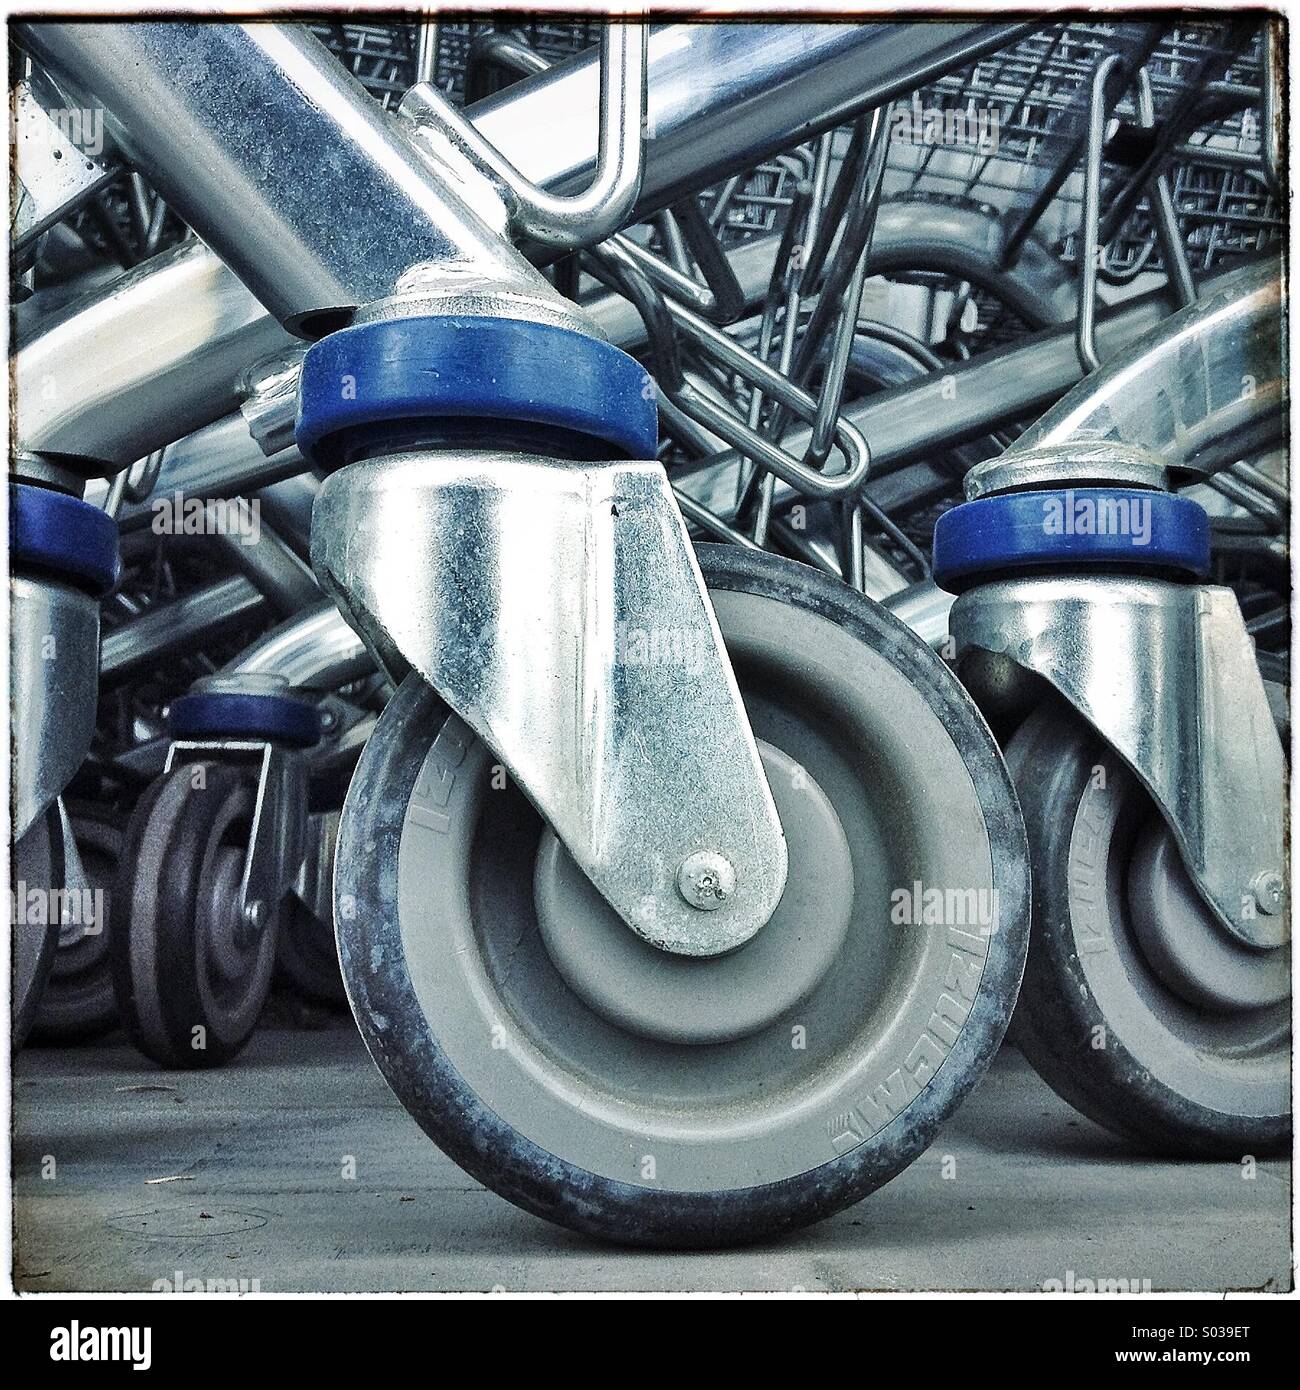 Supermarket shopping cart trolley wheels Stock Photo - Alamy